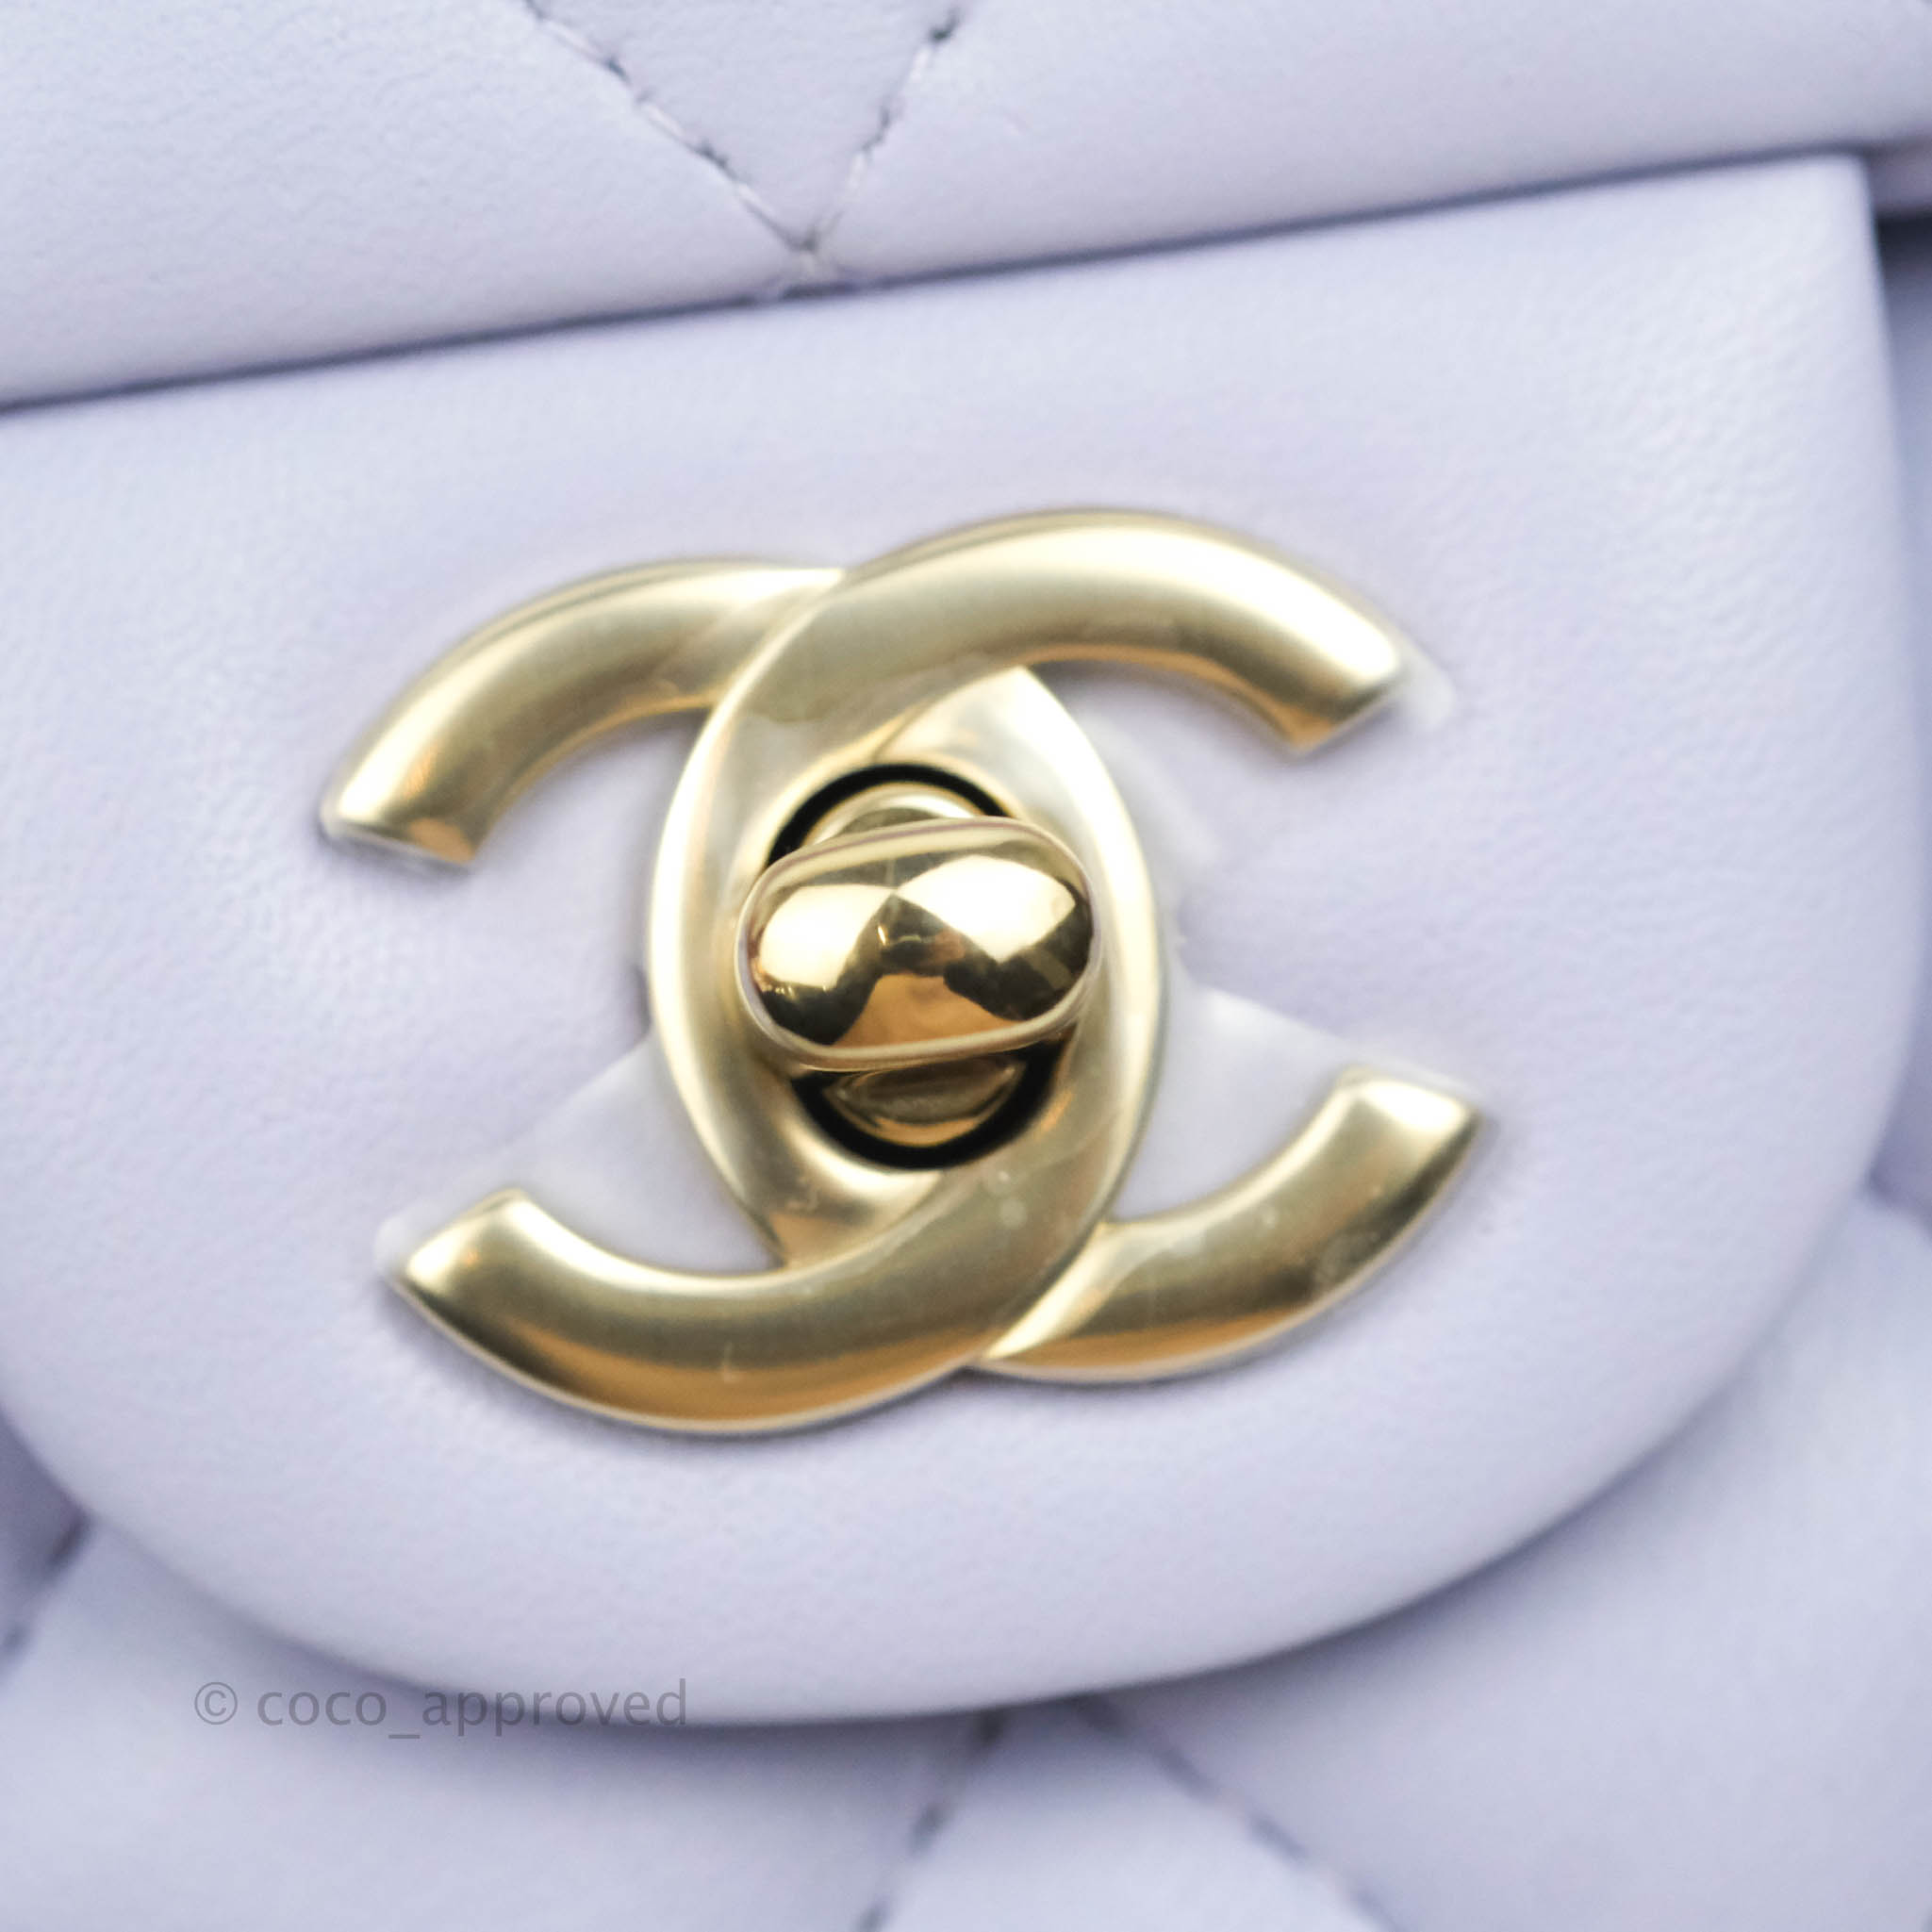 Chanel Multicolor Flap Bag - 54 For Sale on 1stDibs